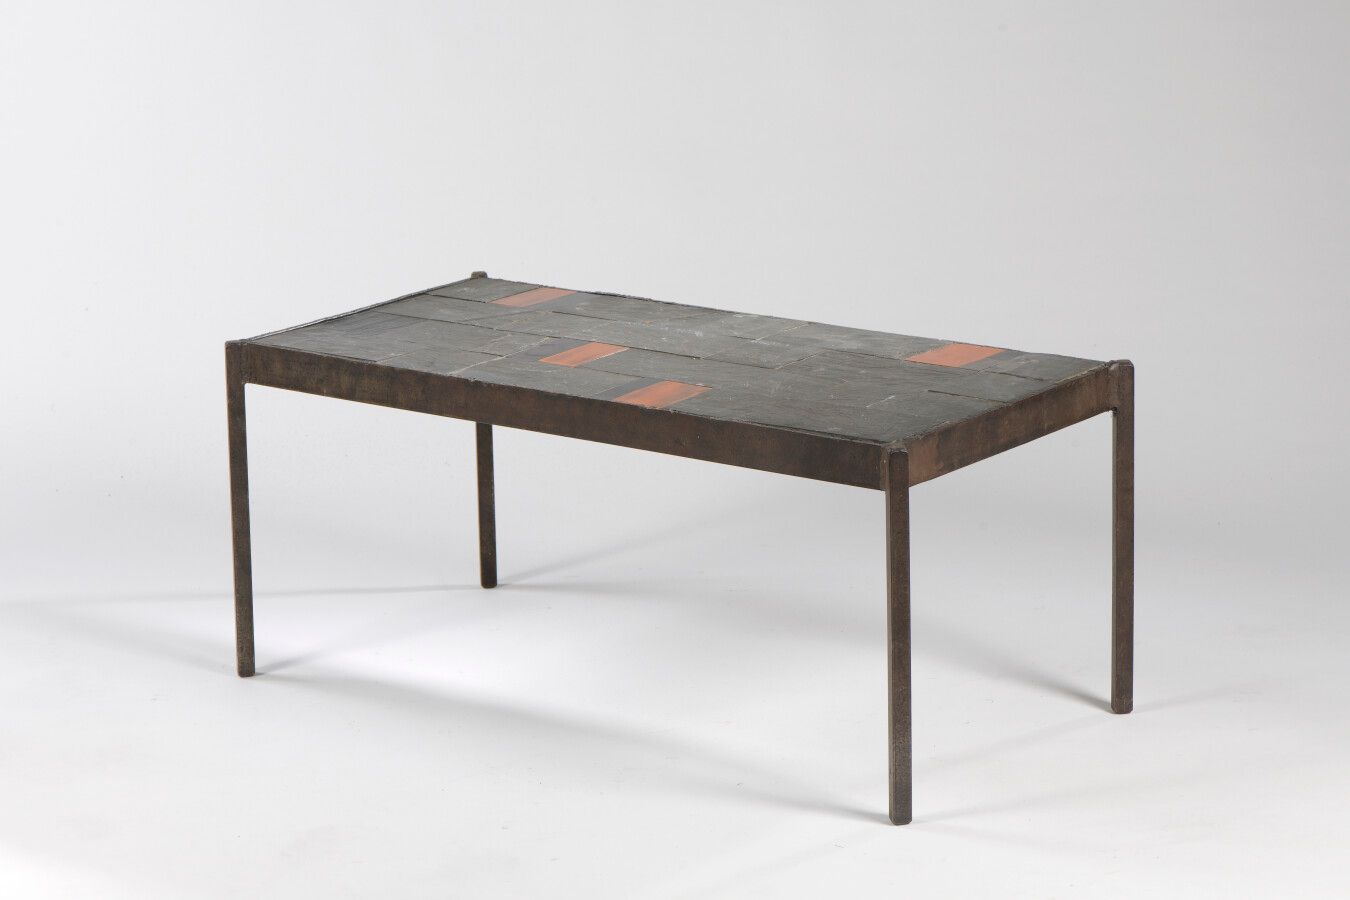 Null 马多-约林(1921-2019)

1960年代的作品

矮桌

陶瓷和石板，锻铁

H.40 cm - D. 45 cm - L. 95 cm

状&hellip;